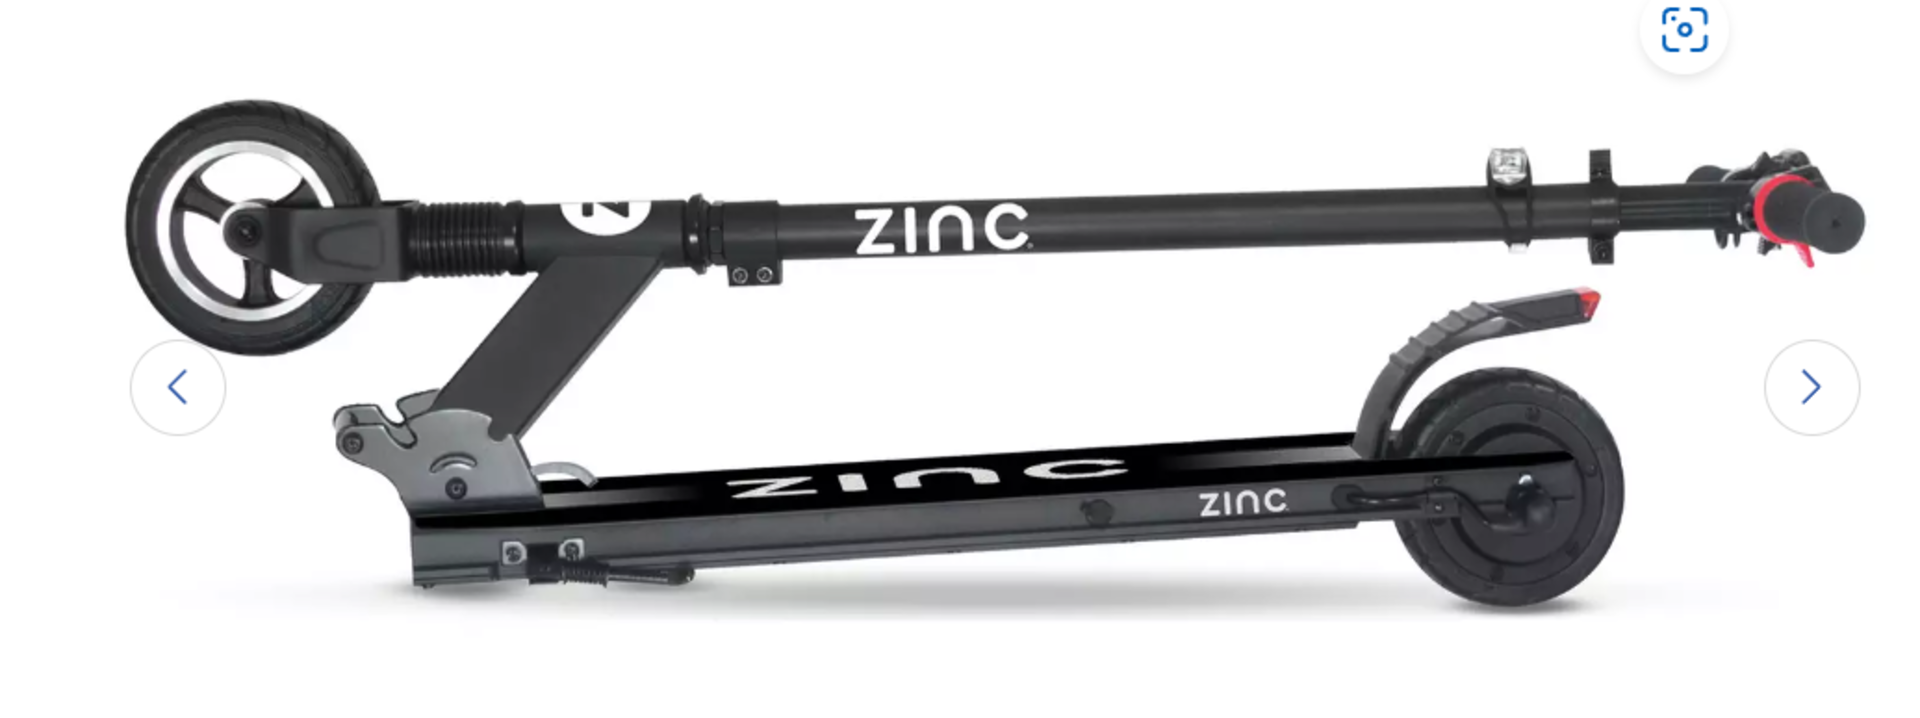 Zinc Flex Folding Electric Scooter. RRP £290.00. Introducing the Zinc Folding Electric Flex Scooter. - Image 2 of 2